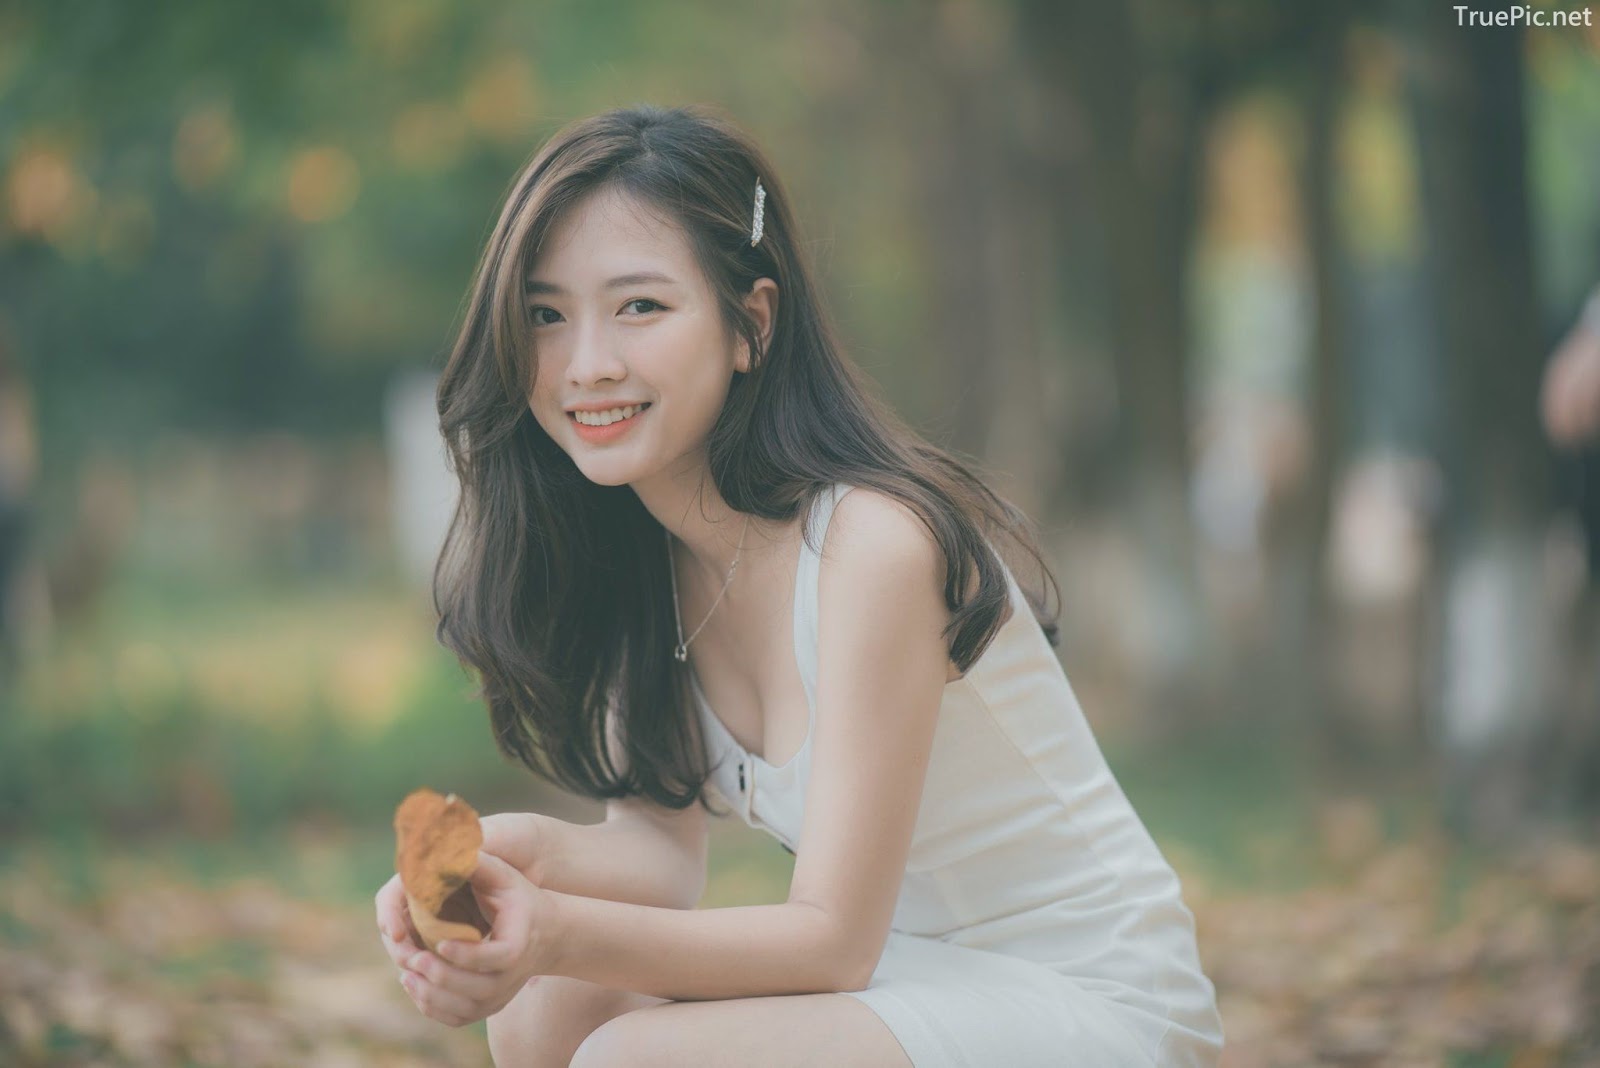 Vietnamese Hot Girl Linh Hoai - Season of falling leaves - TruePic.net - Picture 17